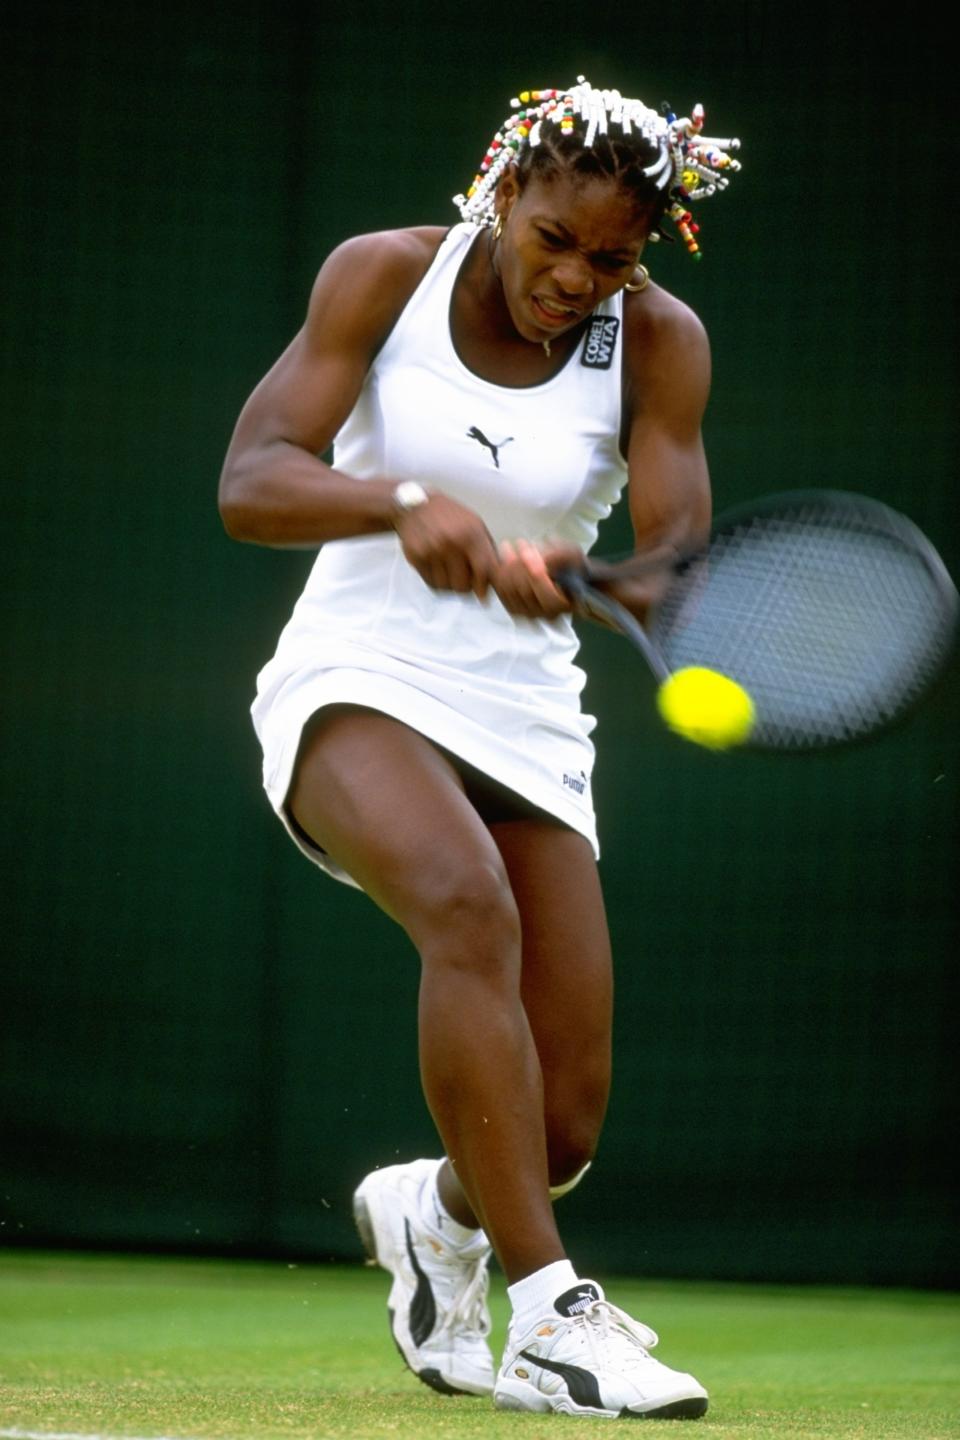 serena williams wimbledon fashion outfits and looks, 29 Jun 1998: Serena Williams of the USA plays a backhand during the 1998 Wimbledon Championships played at Wimbledon, London, England. Mandatory Credit: Alex Livesey /Allsport